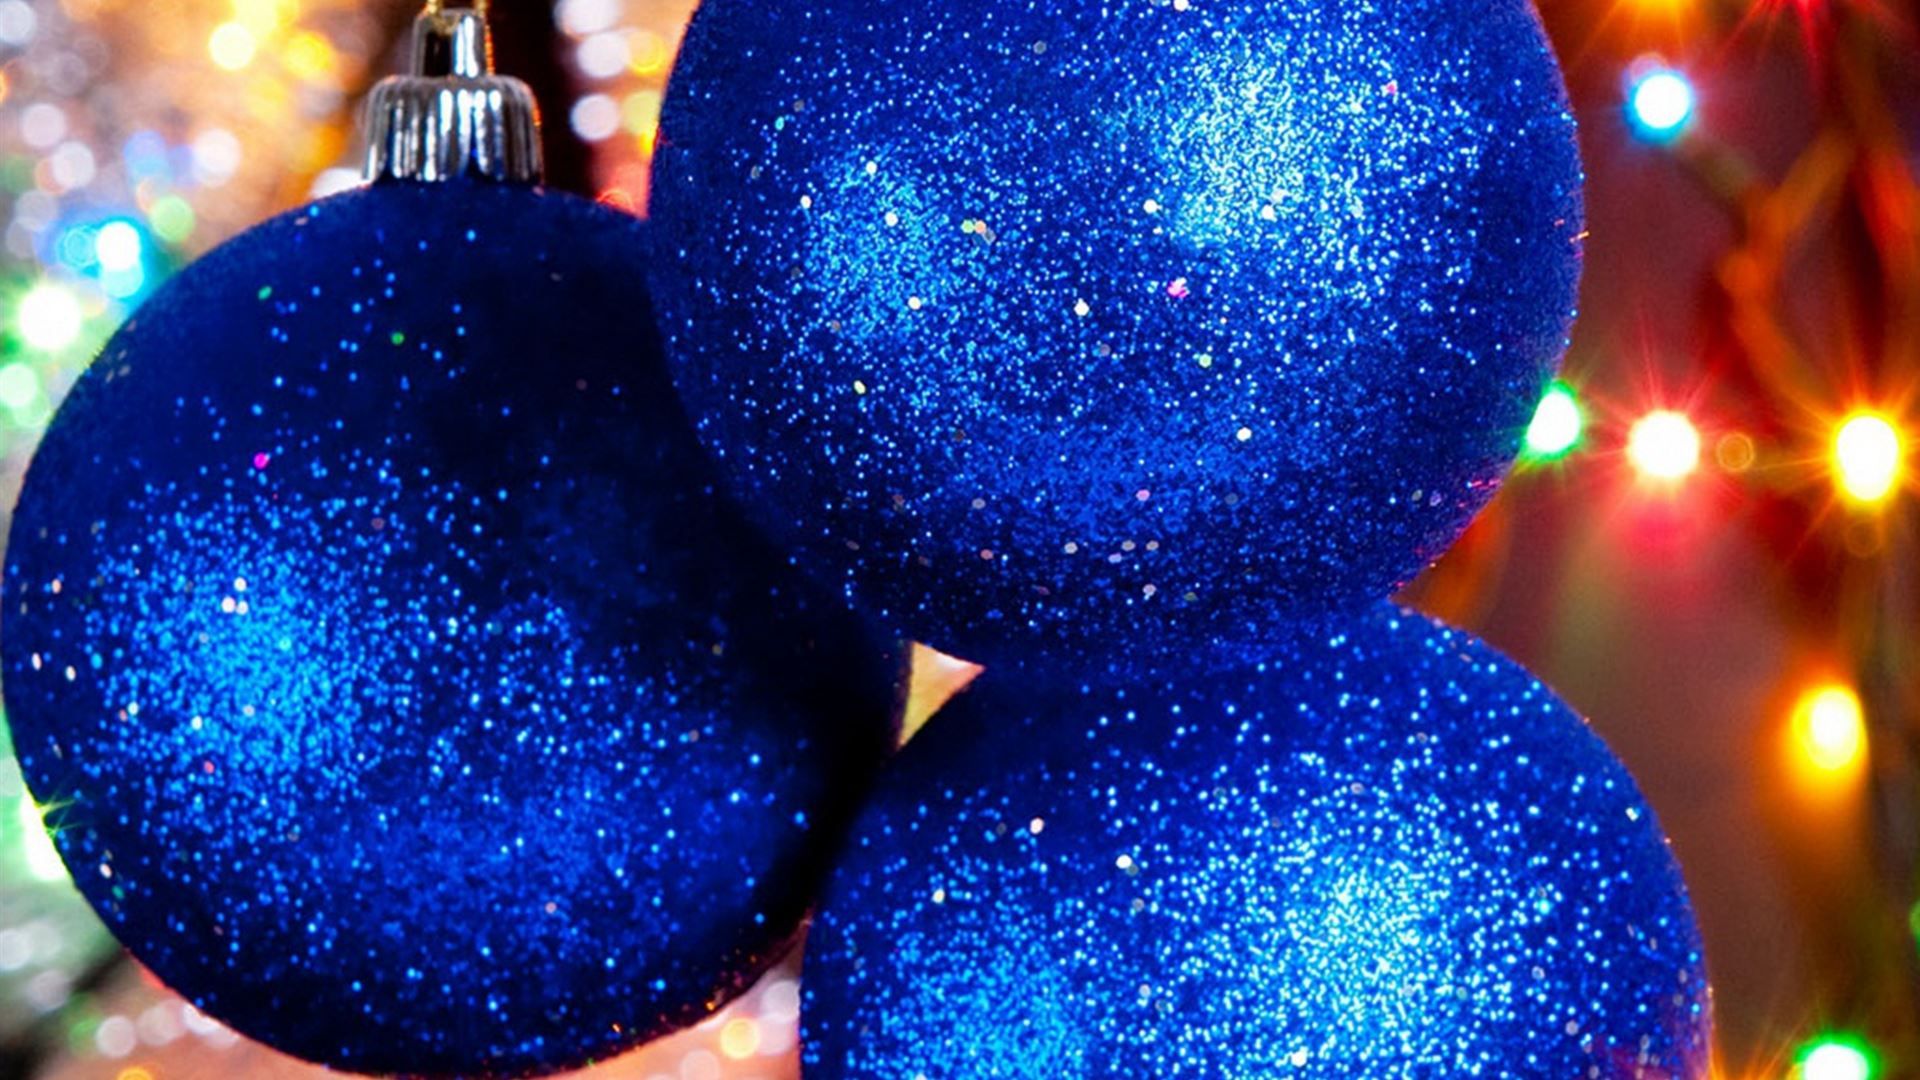 Blue Christmas Balls iPad Air Wallpaper Free Download